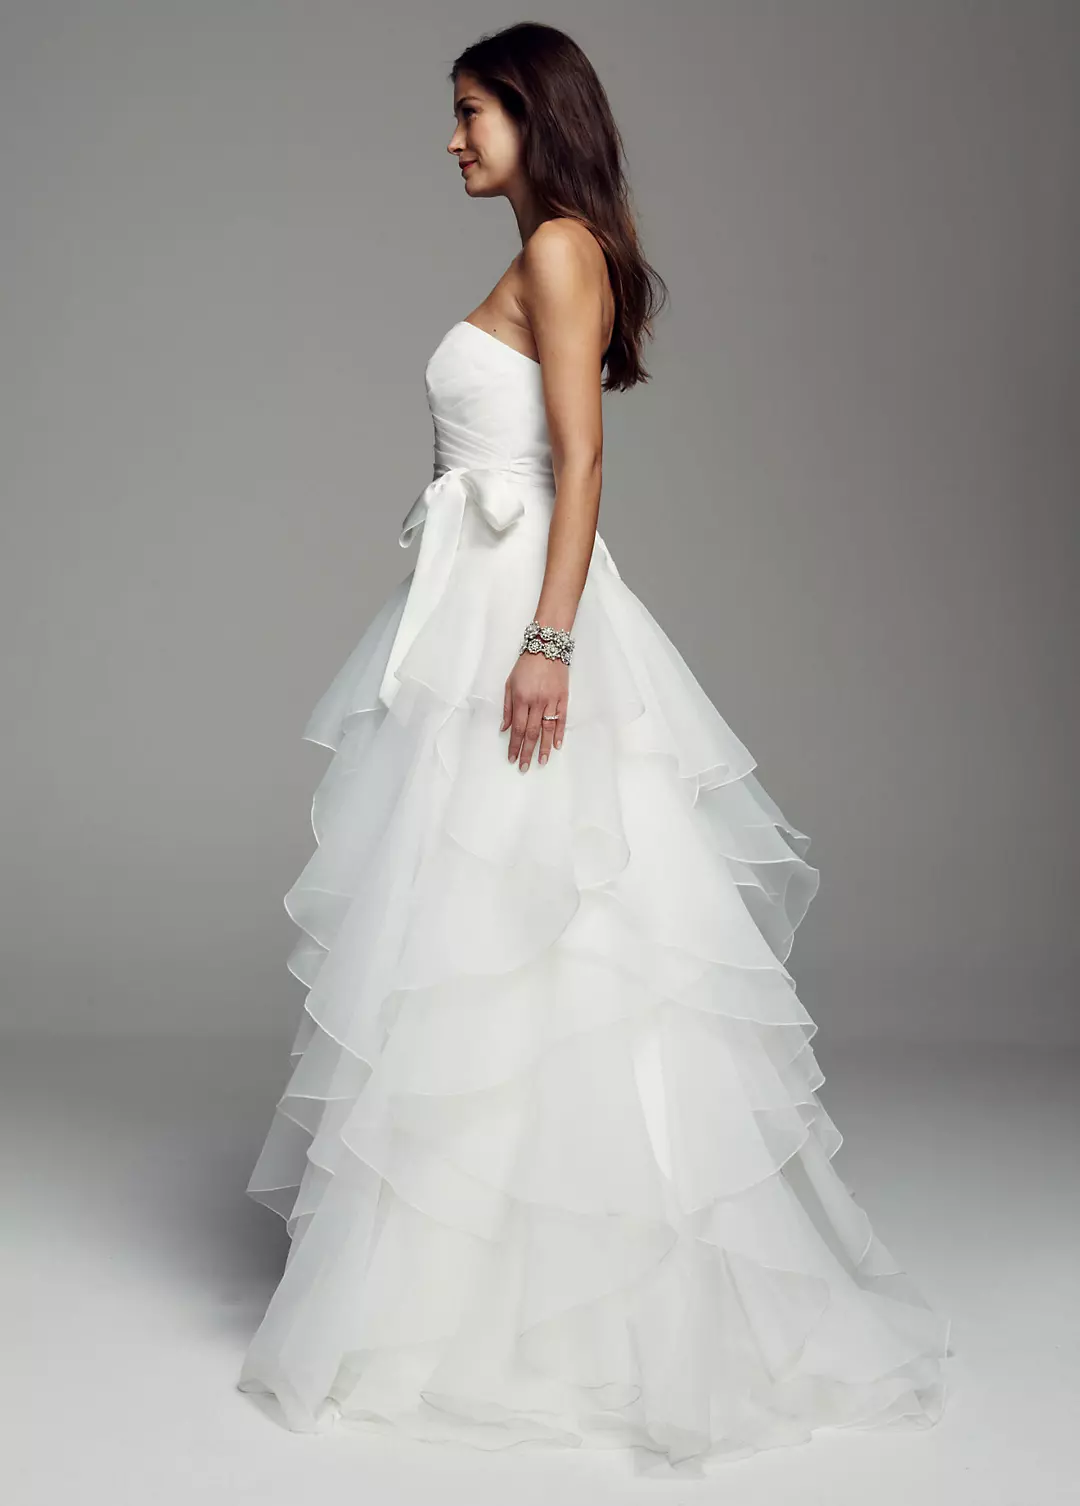 Strapless Organza Wedding Dress with Ruffles Image 3